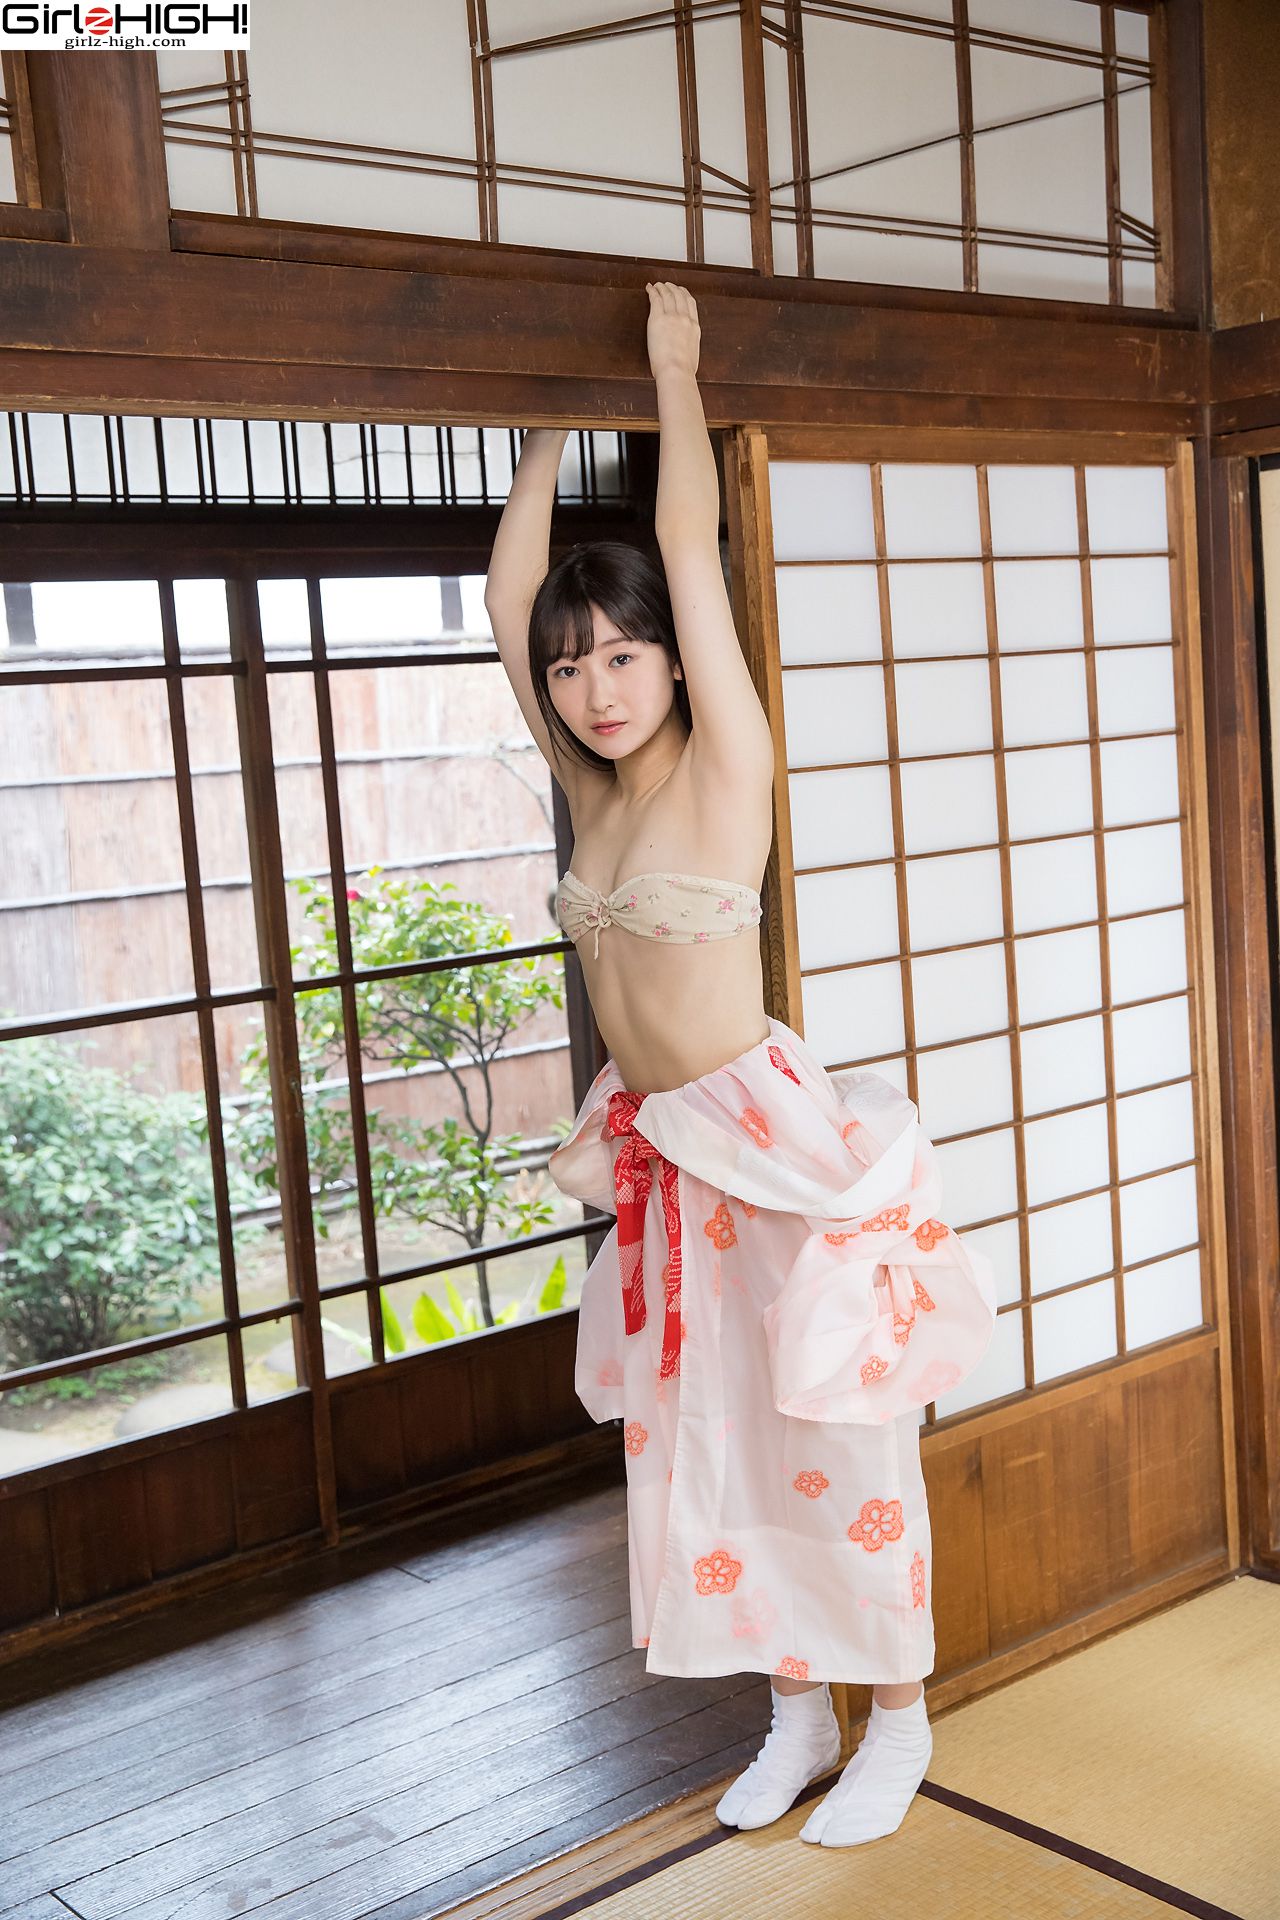 [Girlz-High]和服日本嫩模:近藤麻美(近藤あさみ)高品质壁纸图片珍藏版(38P)